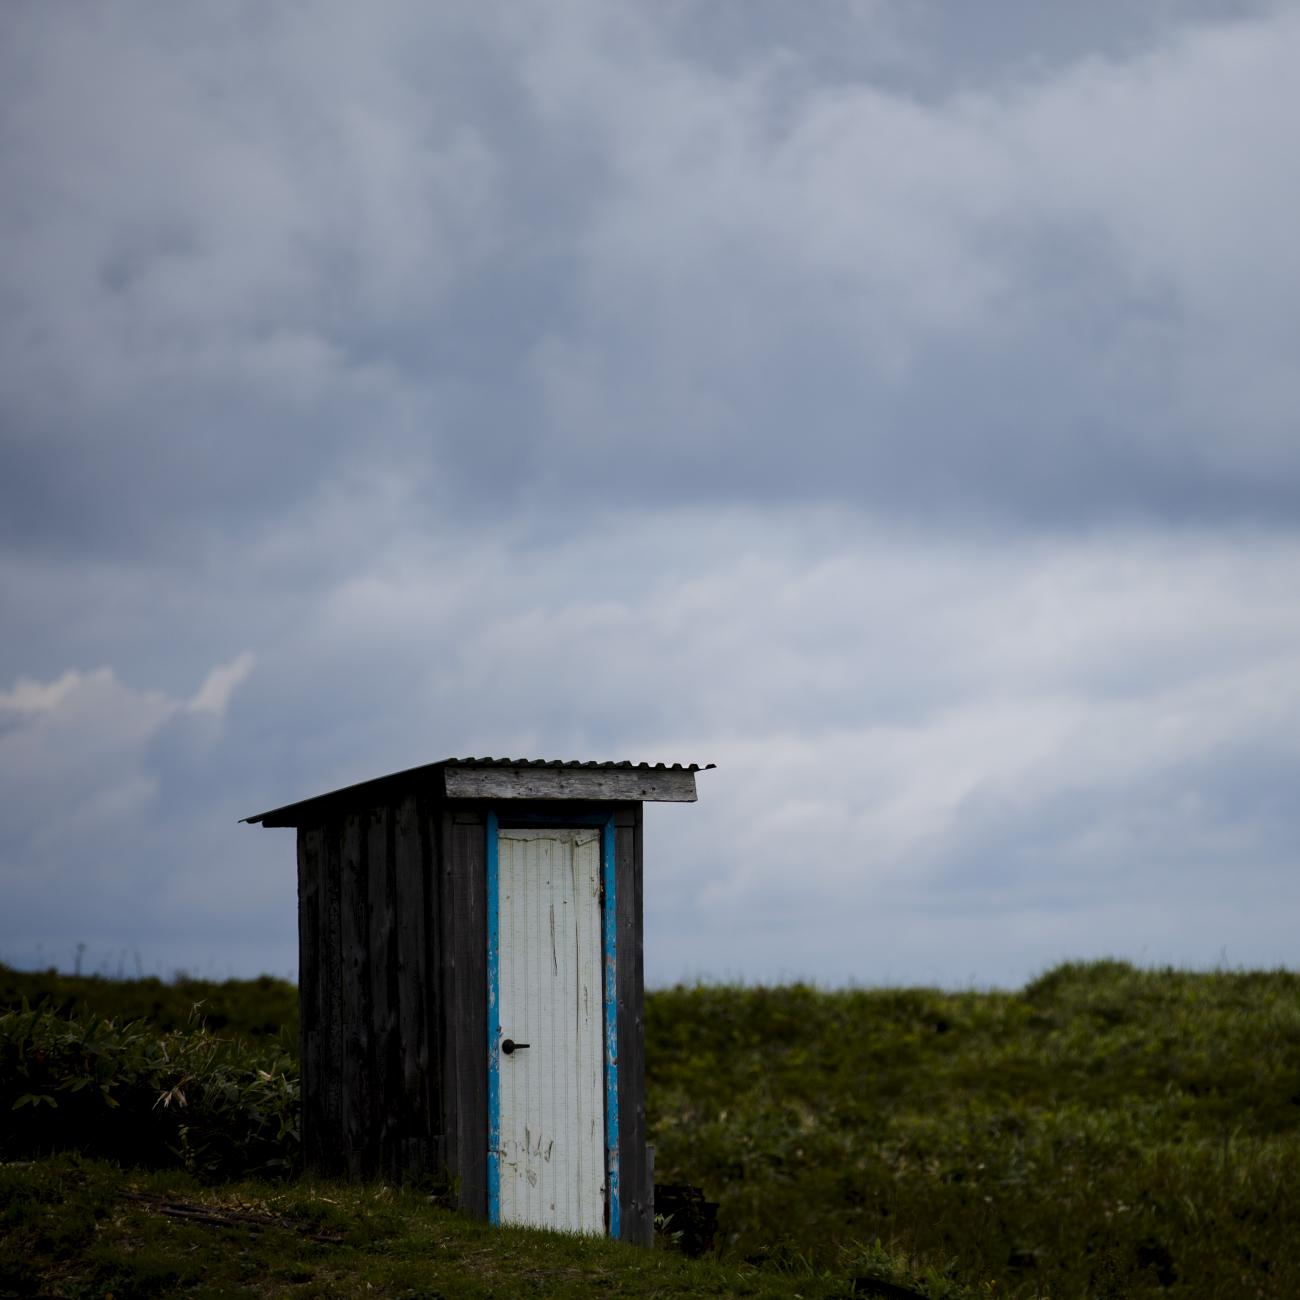 A hut is seen against a cloudy field